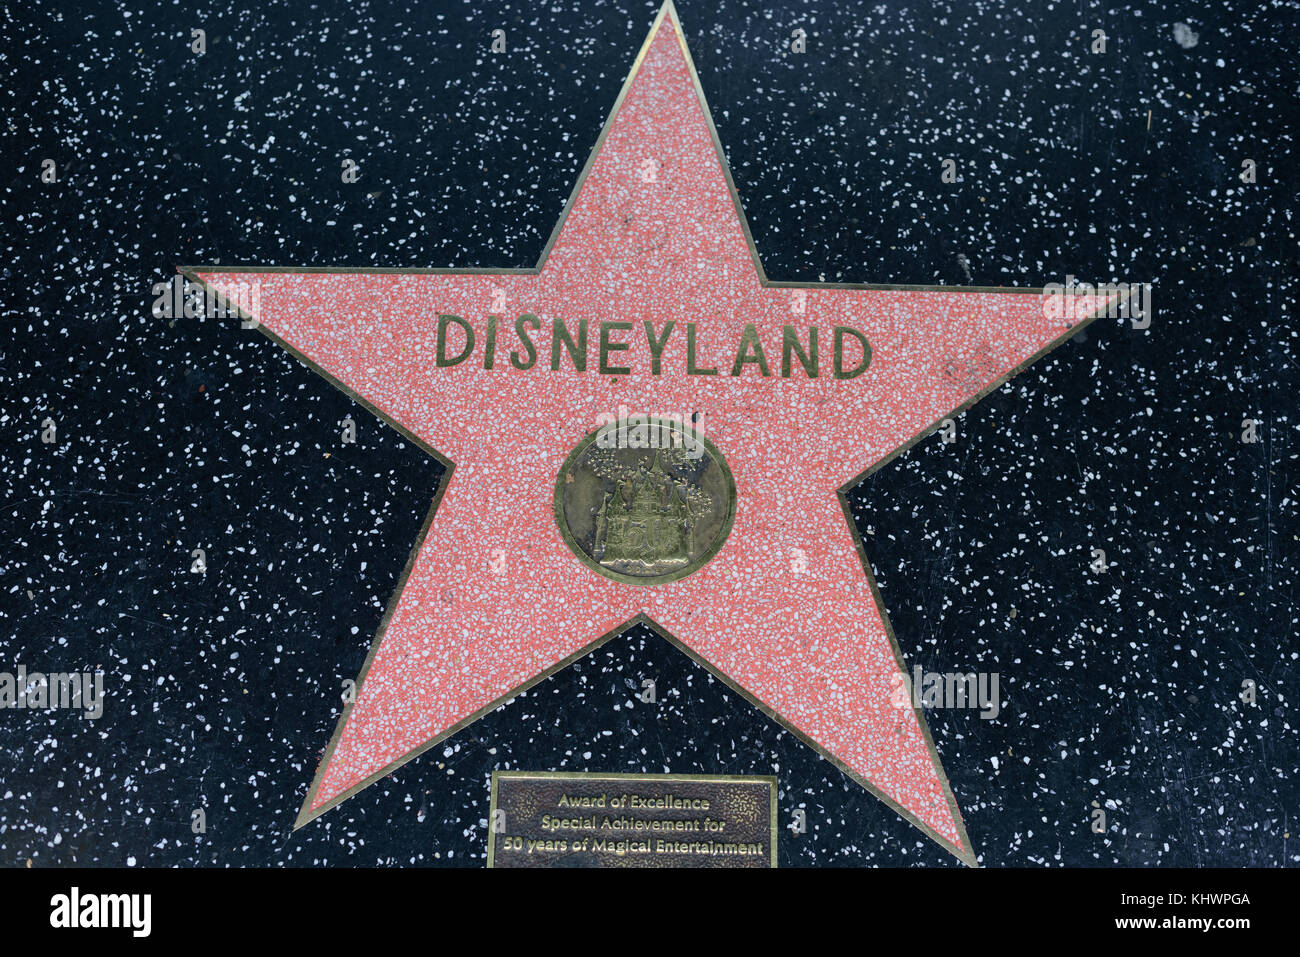 HOLLYWOOD, CA - DEZEMBER 06: Disneyland Star auf dem Hollywood Walk of Fame in Hollywood, Kalifornien am 6. Dezember 2016. Stockfoto